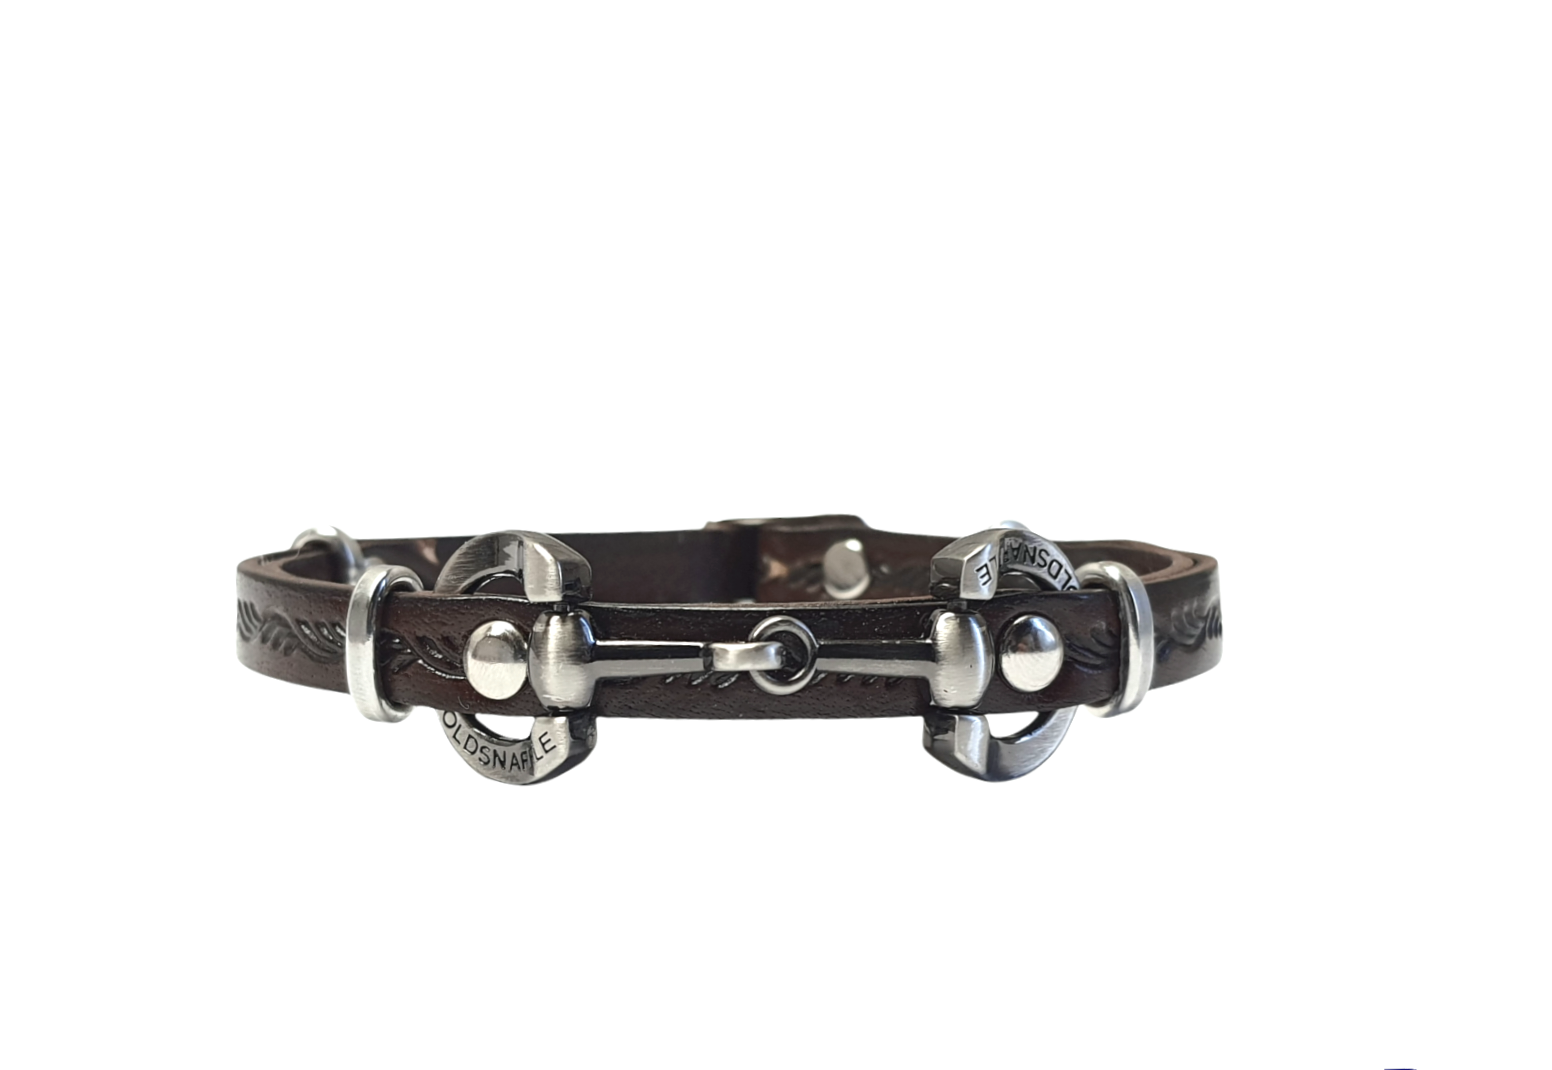 8mm leather bracelet